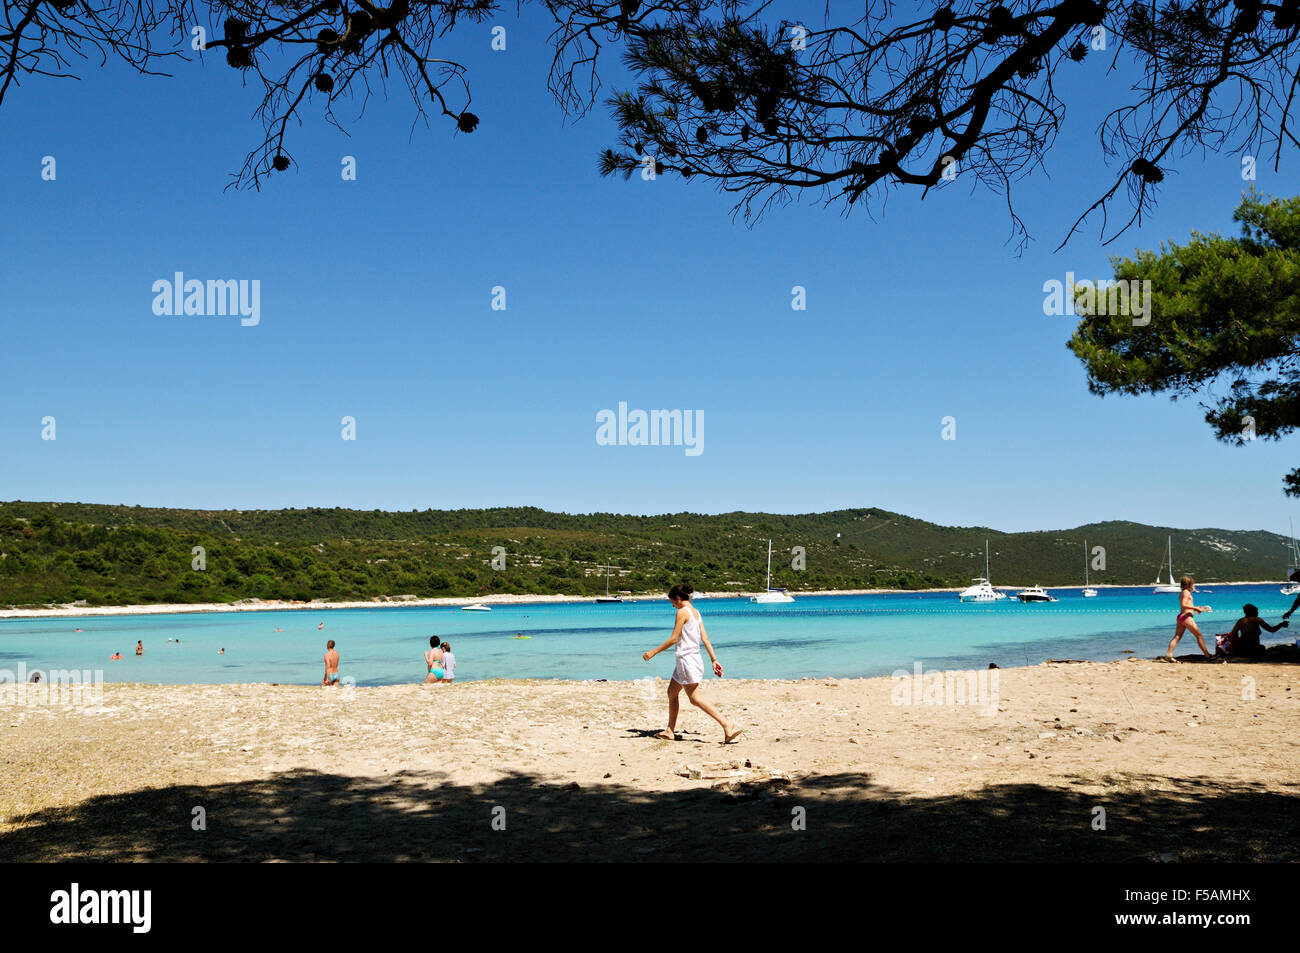 Dugi Otok Immagini e Fotos Stock - Alamy